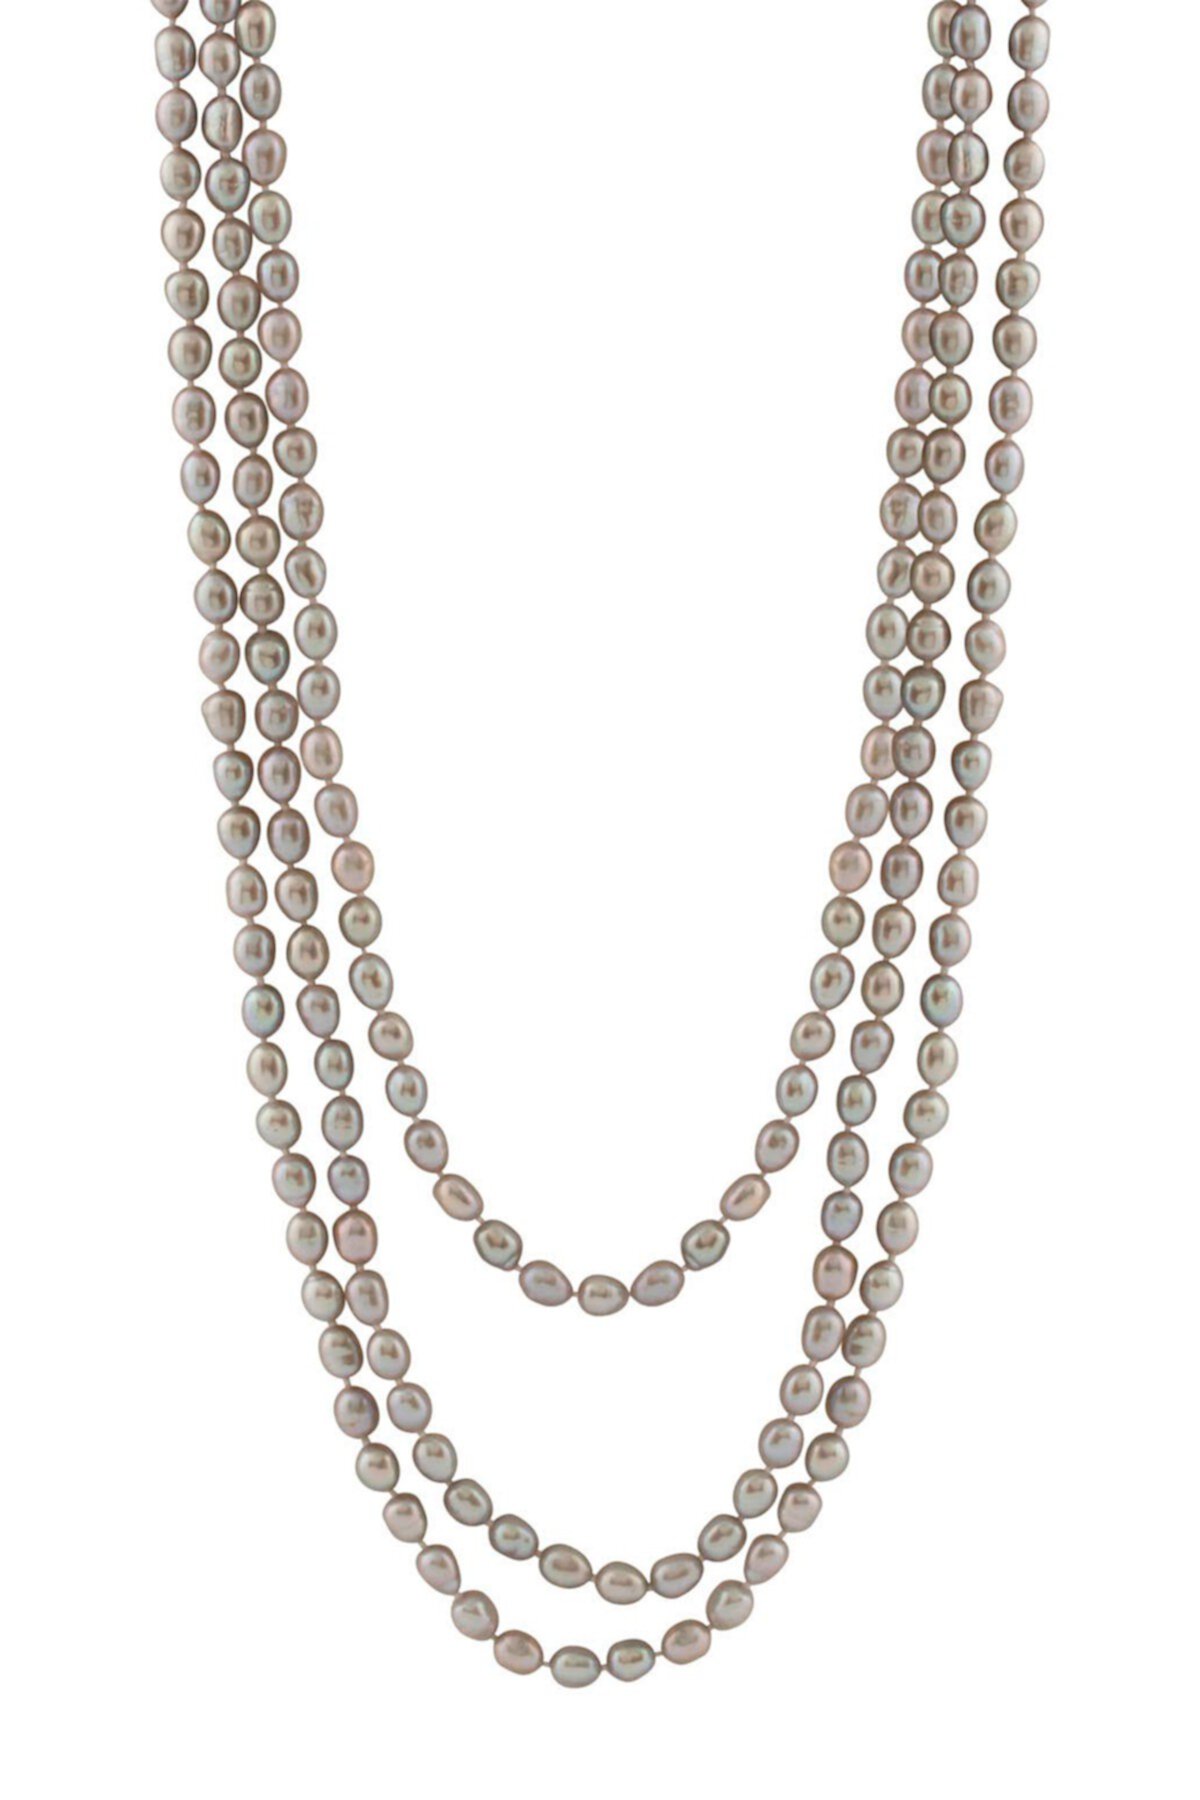 Endless 5-6mm Grey Freshwater Pearl Necklace Splendid Pearls